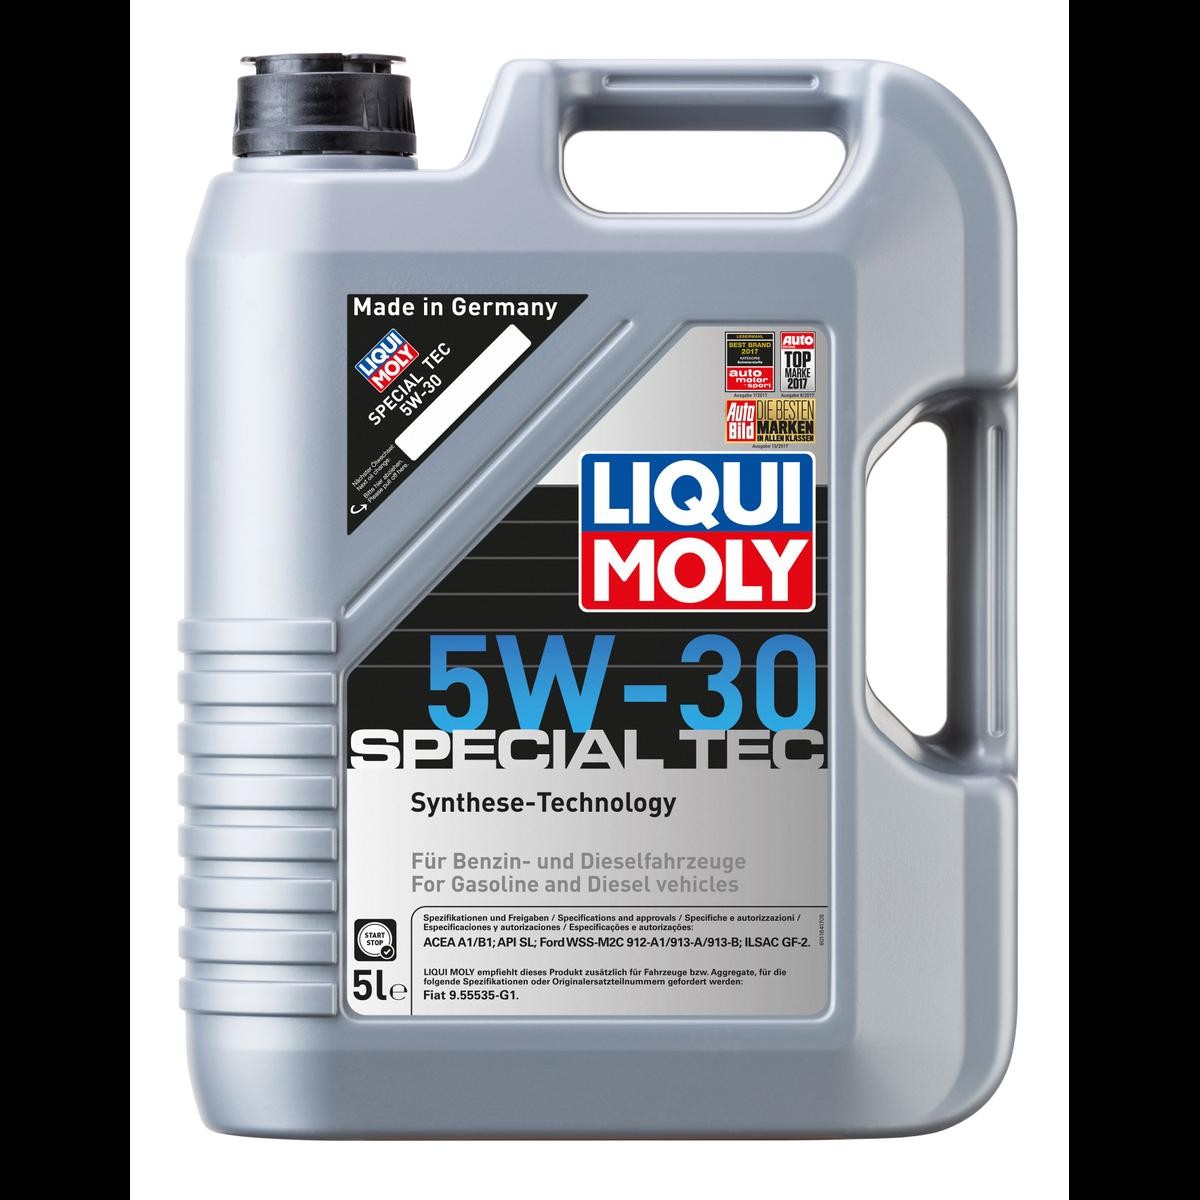 LIQUI MOLY Special Tec 1164 HONDA Motorenöl Kosten und Erfahrung